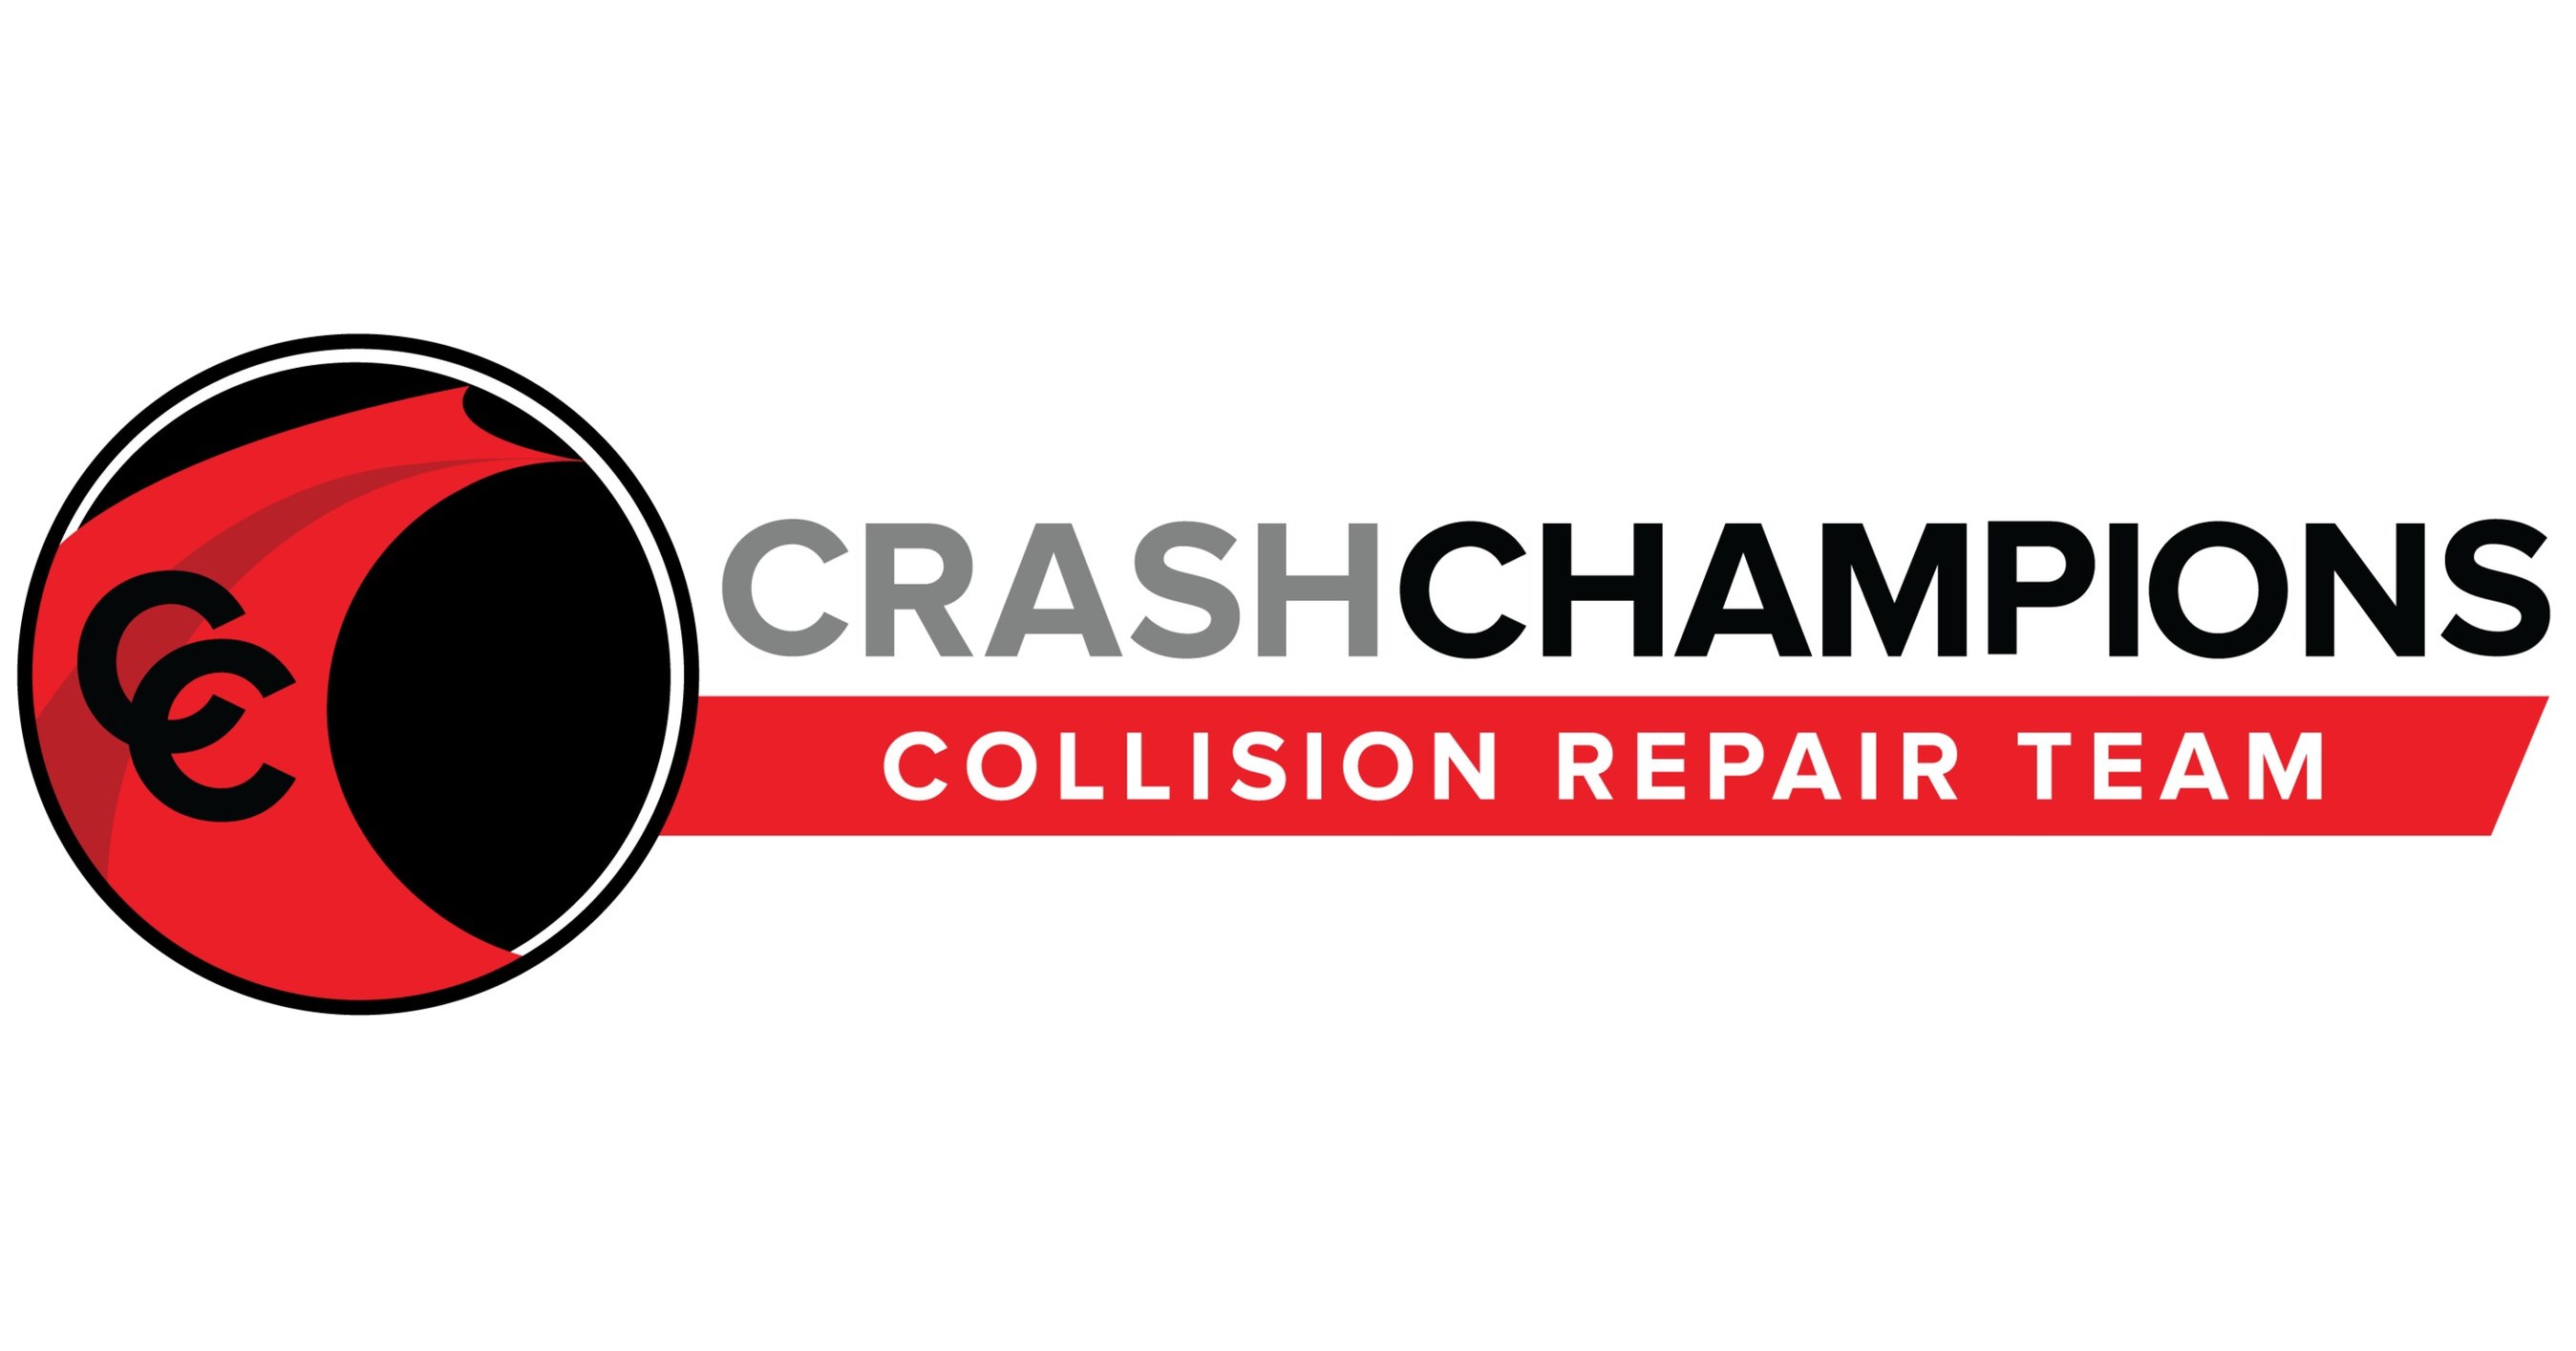 Crash Champions Company Profile: Valuation, Funding & Investors